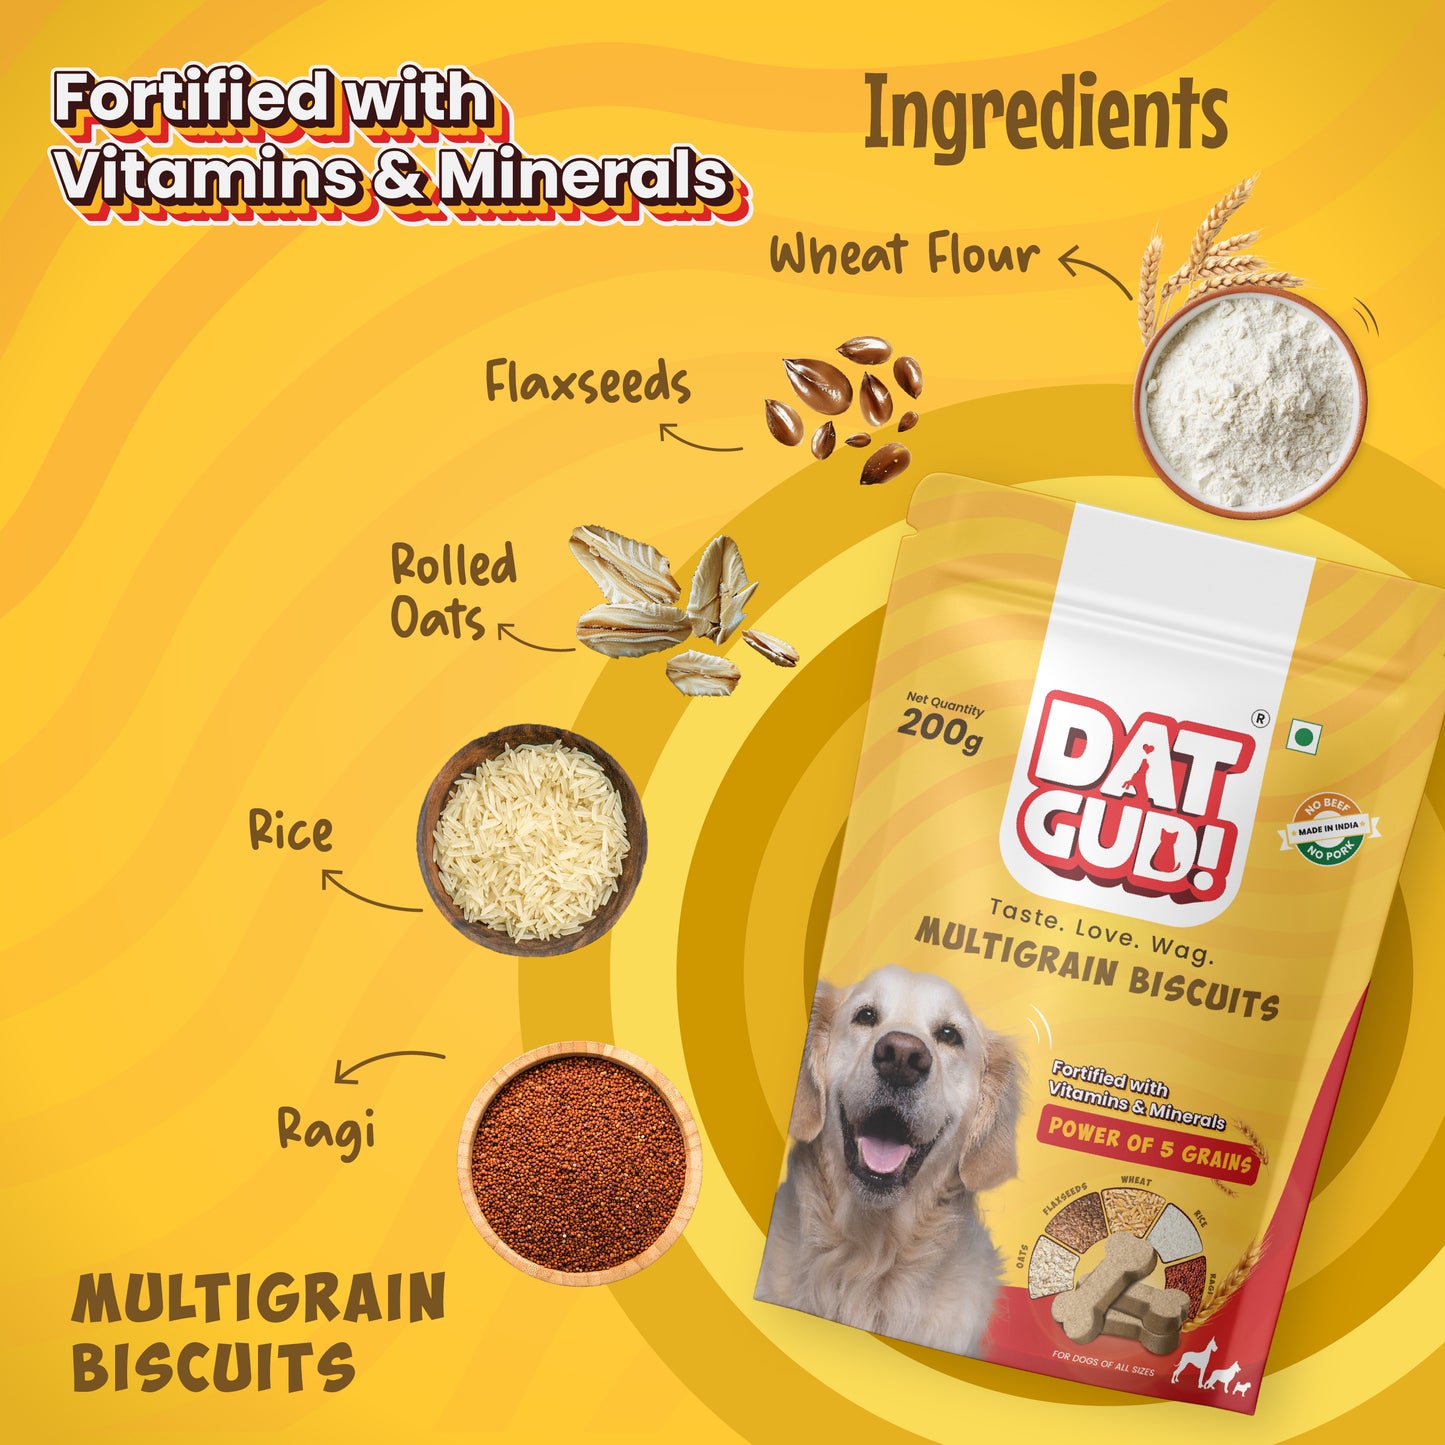 DatGud Multigrain Dog Biscuits